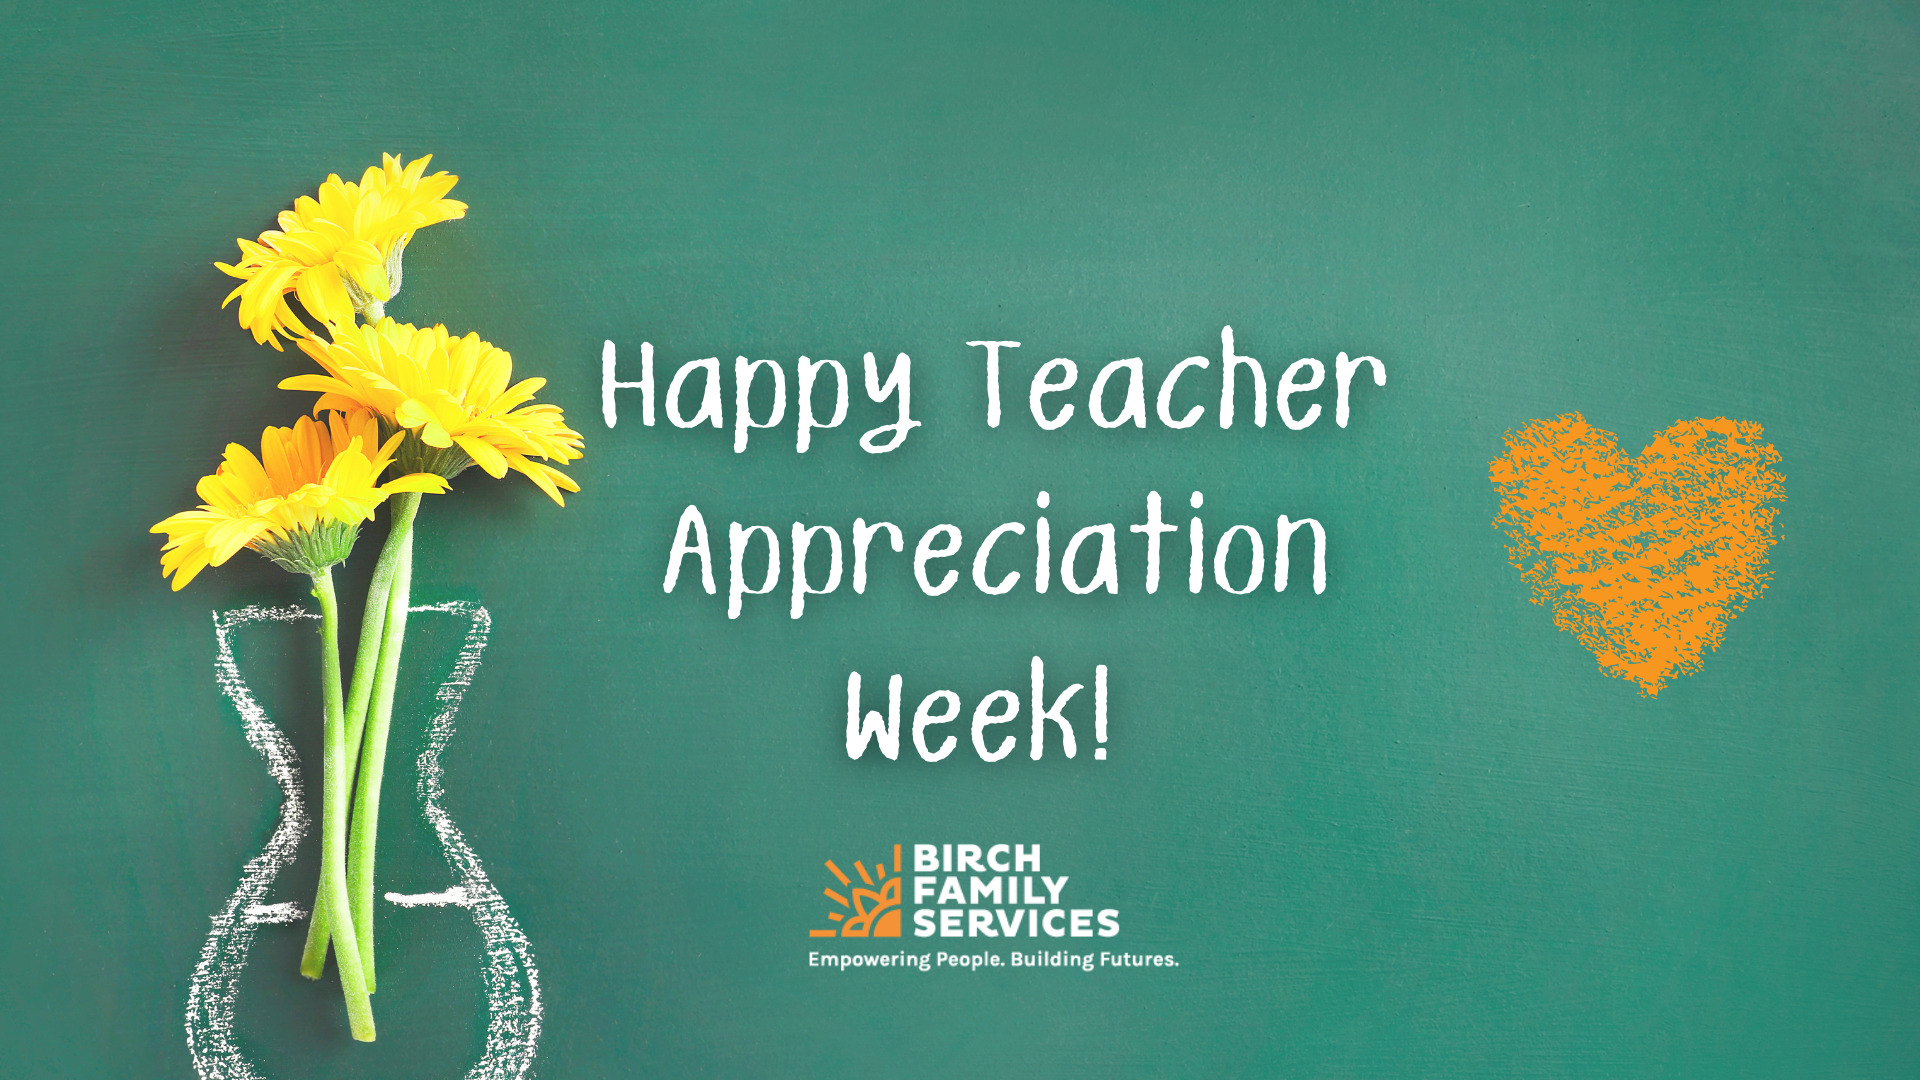 a-message-of-gratitude-for-our-teachers-during-teacher-appreciation